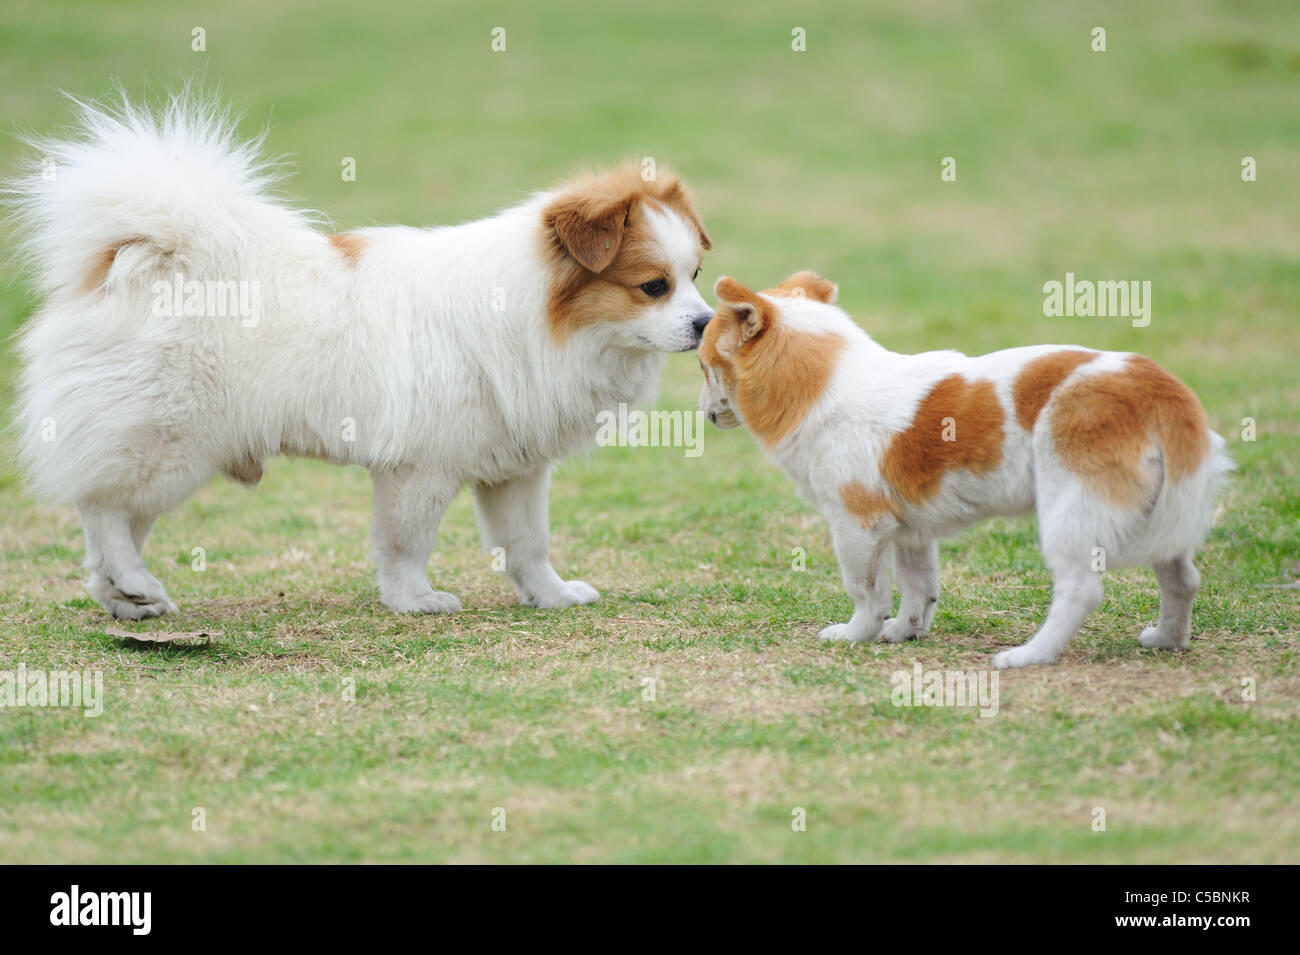 Zwei Hunde gegenseitig anstarren Stockfotografie - Alamy